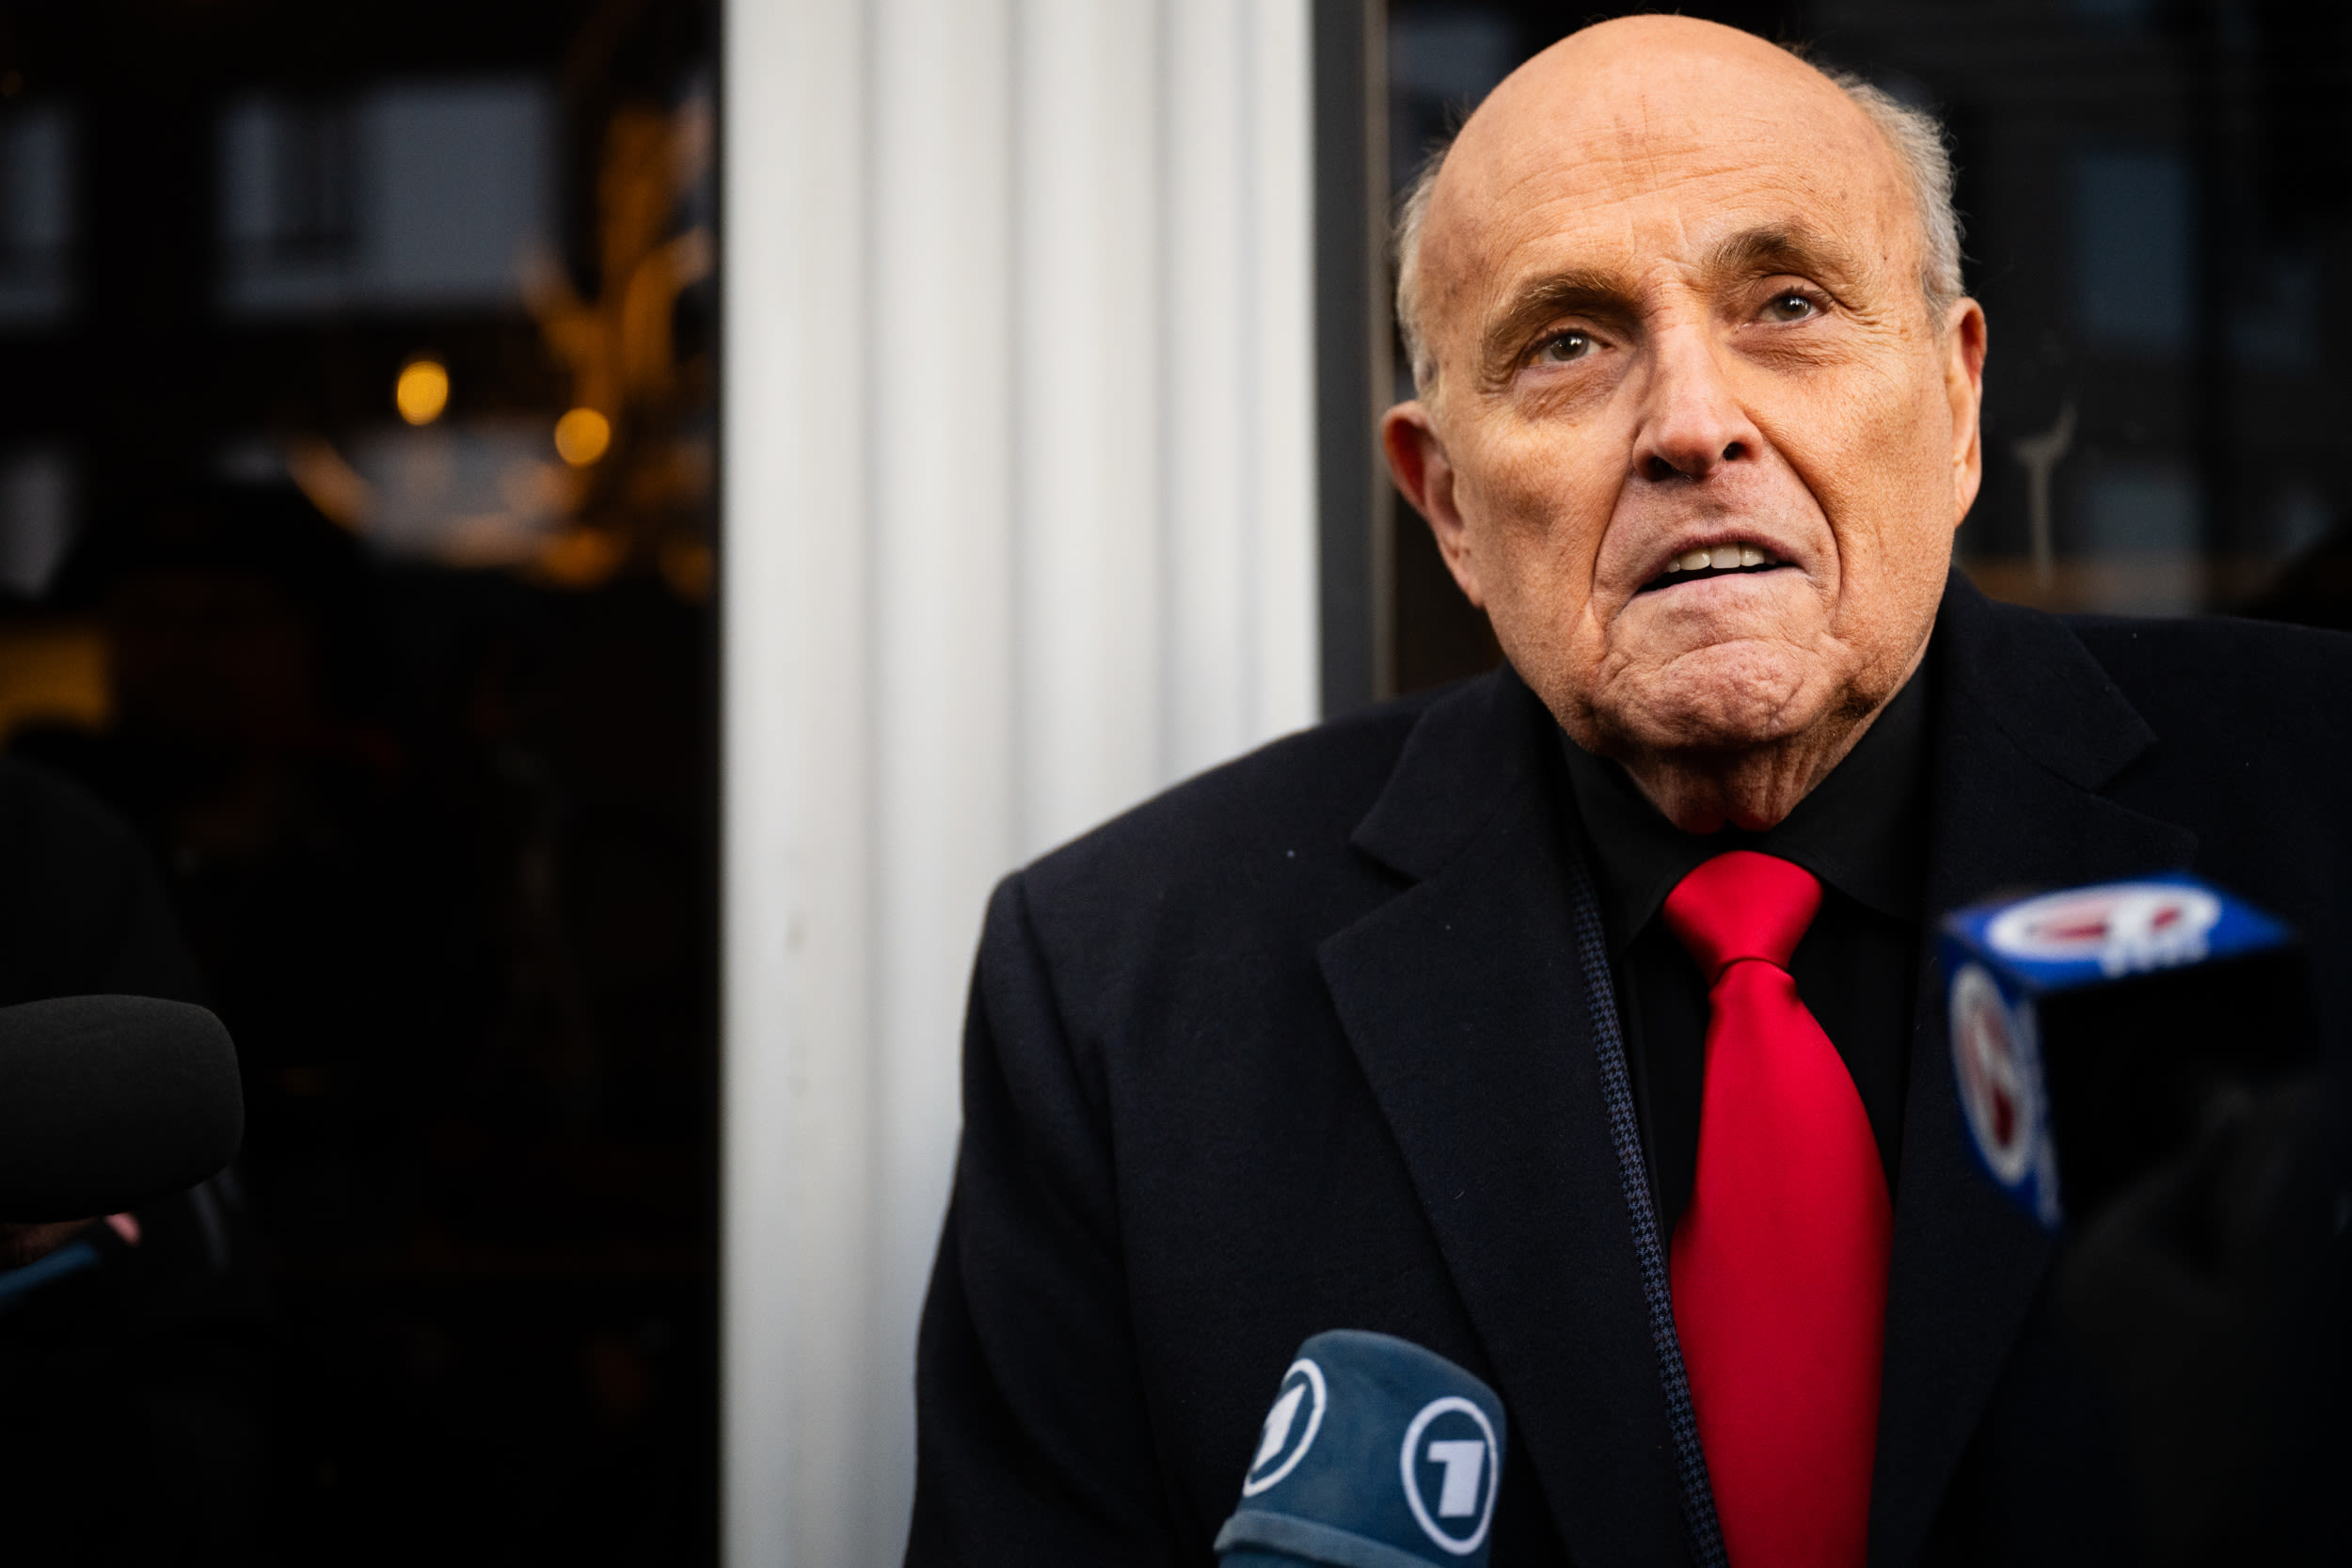 Rudy Giuliani responds to disbarment: "Corrupt"